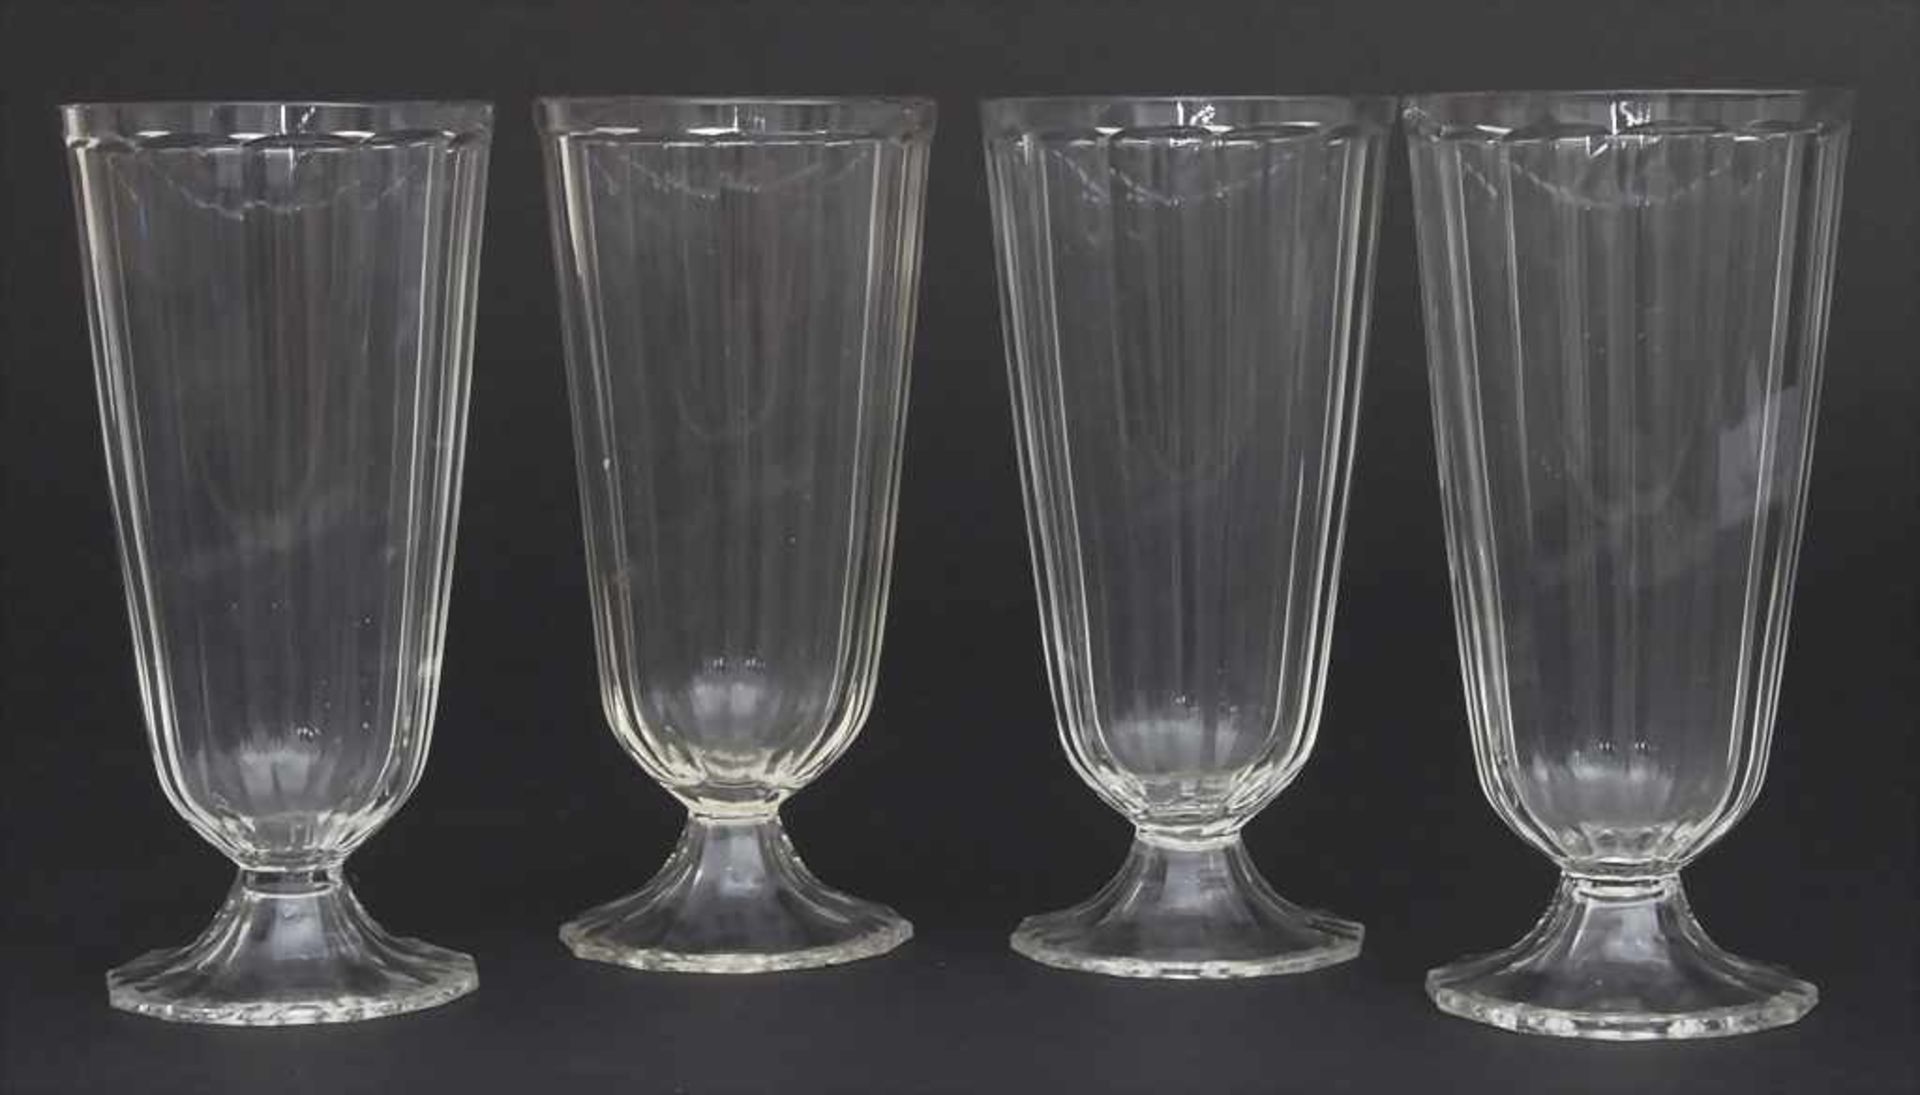 4 Biergläser / A set of 4 beer glasses, BakalowitzMaterial: farbloses Glas, 12-fach facettierte